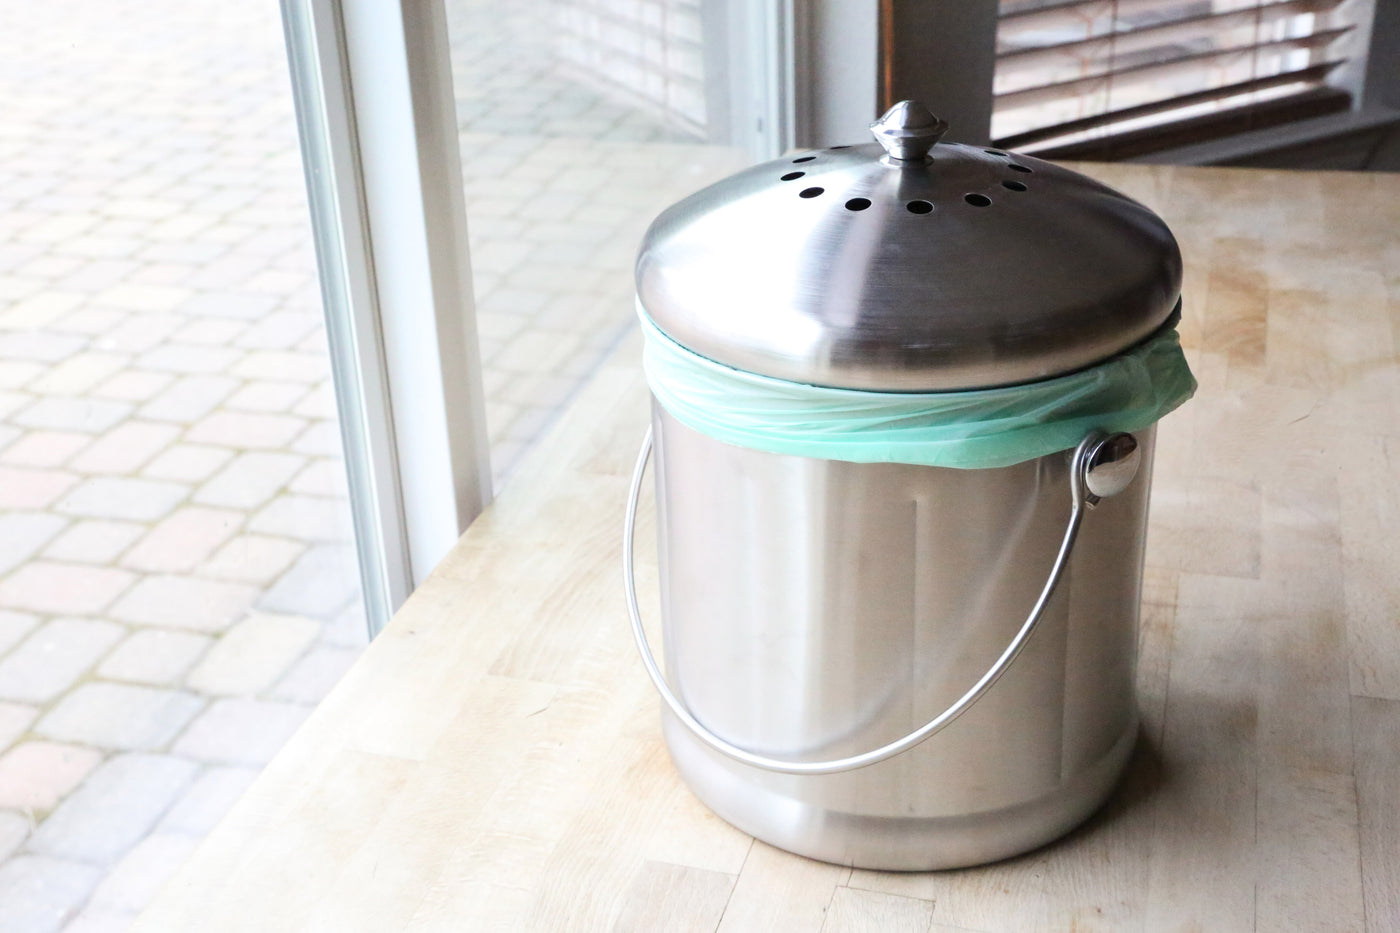 Kitchen Compost Bin, Stainless Steel, 1.3-Gallon